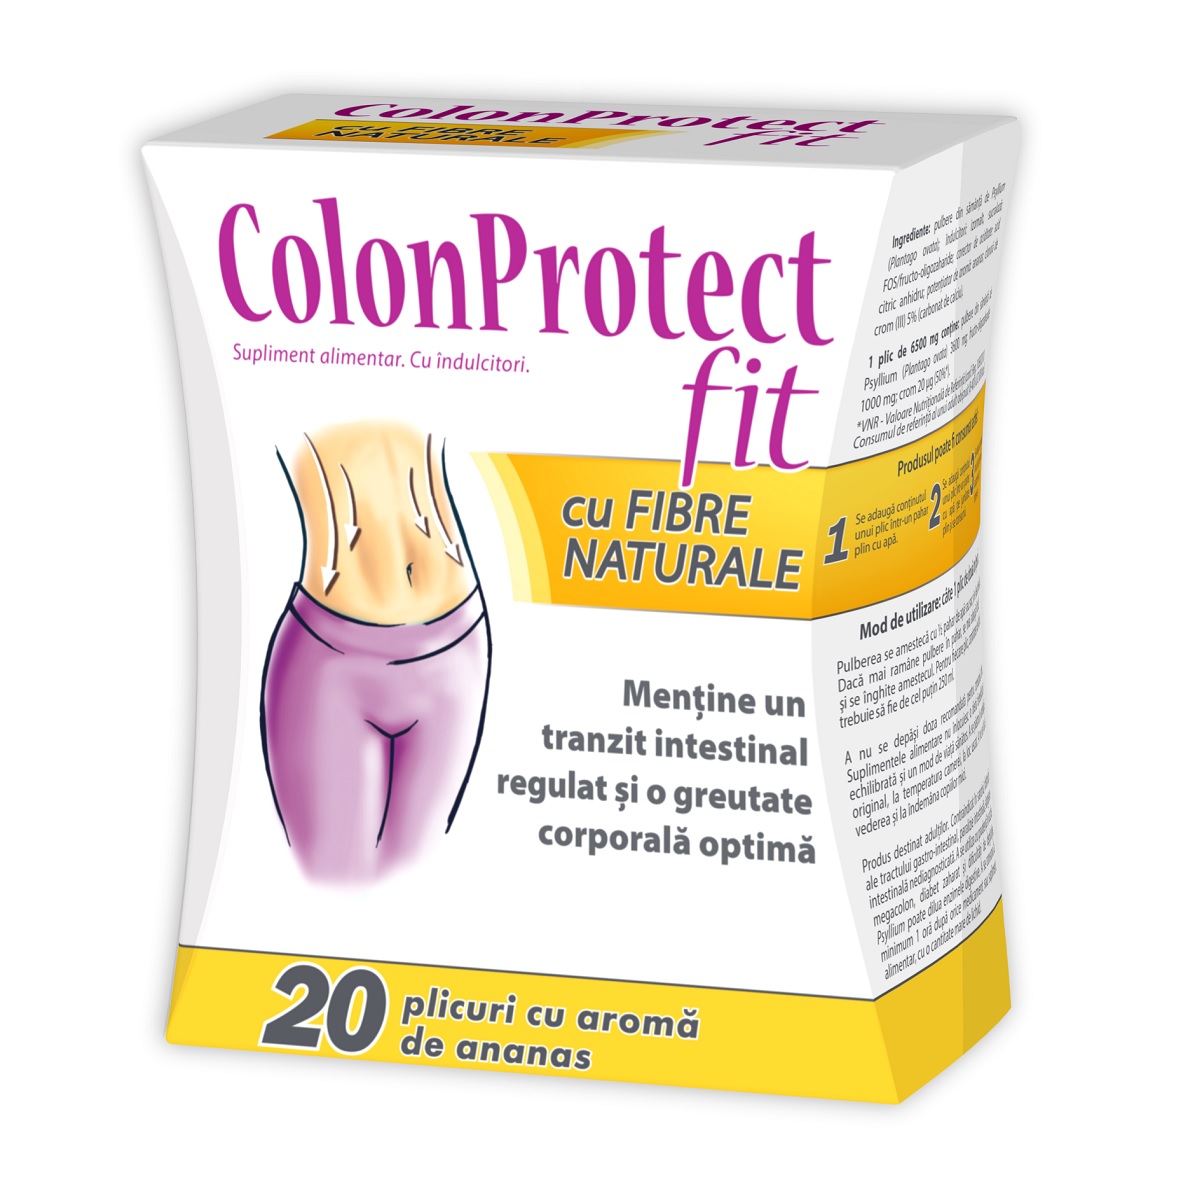 Colon protect preturi, rezultate colon protect lista produse & preturi